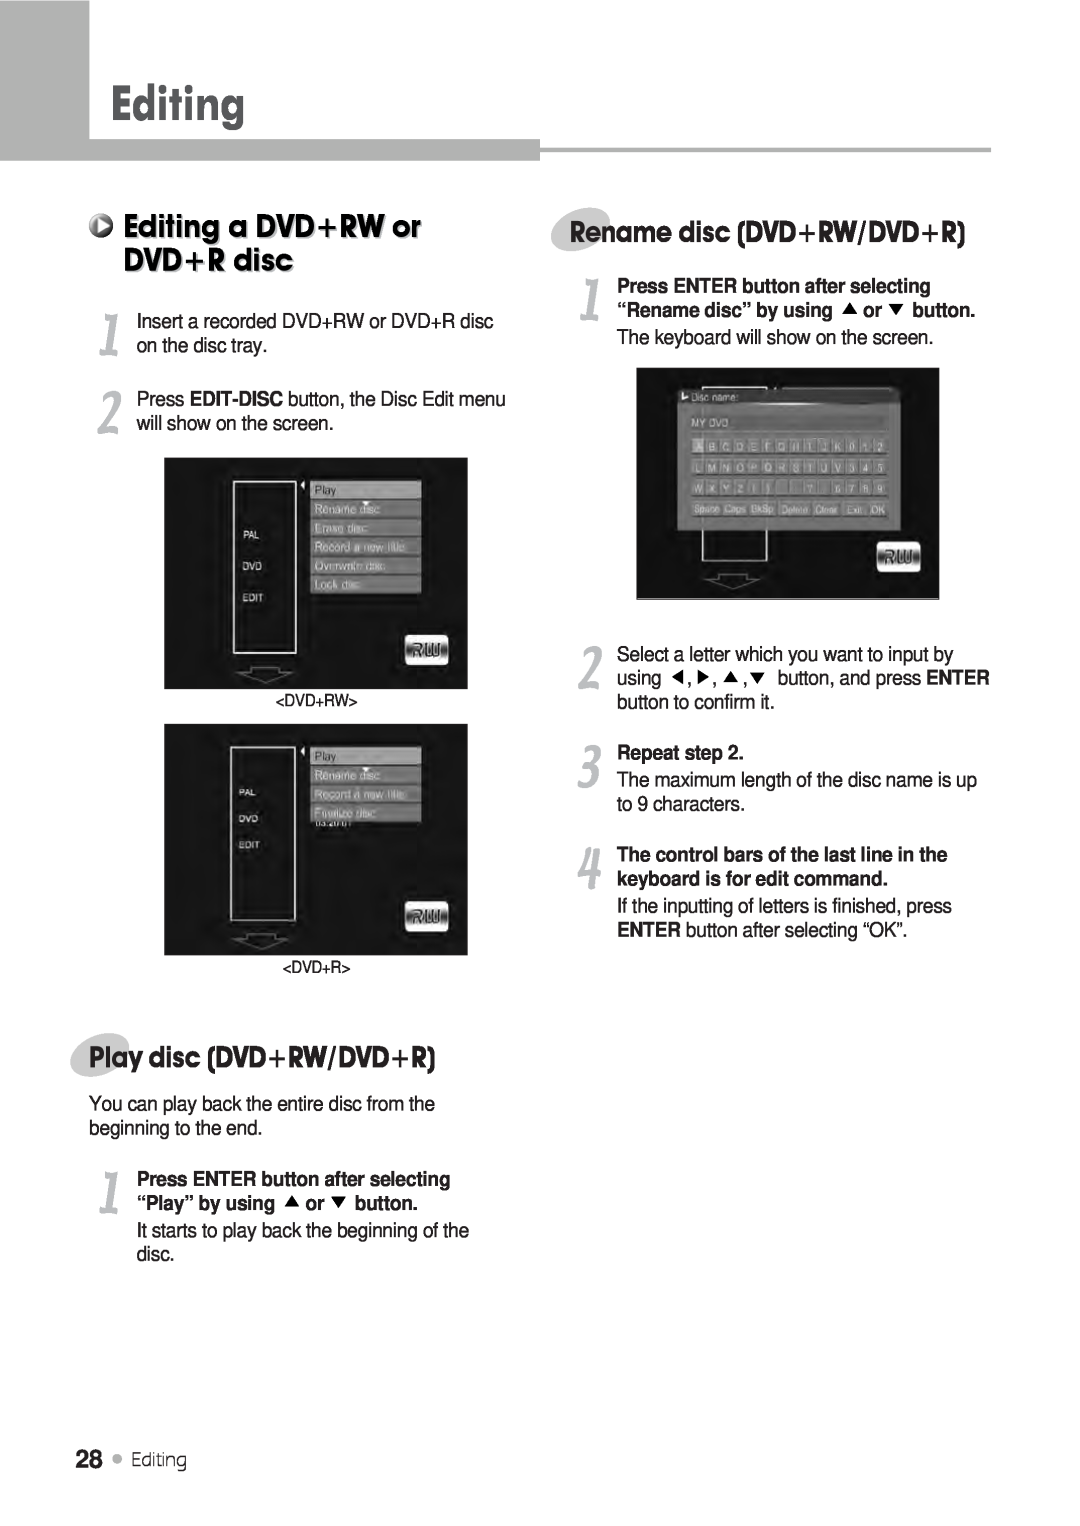 H & B DRX-430 manual Editing a DVD+RW or DVD+R disc, Rename disc DVD+RW/DVD+R, Play disc DVD+RW/DVD+R, Repeat step 